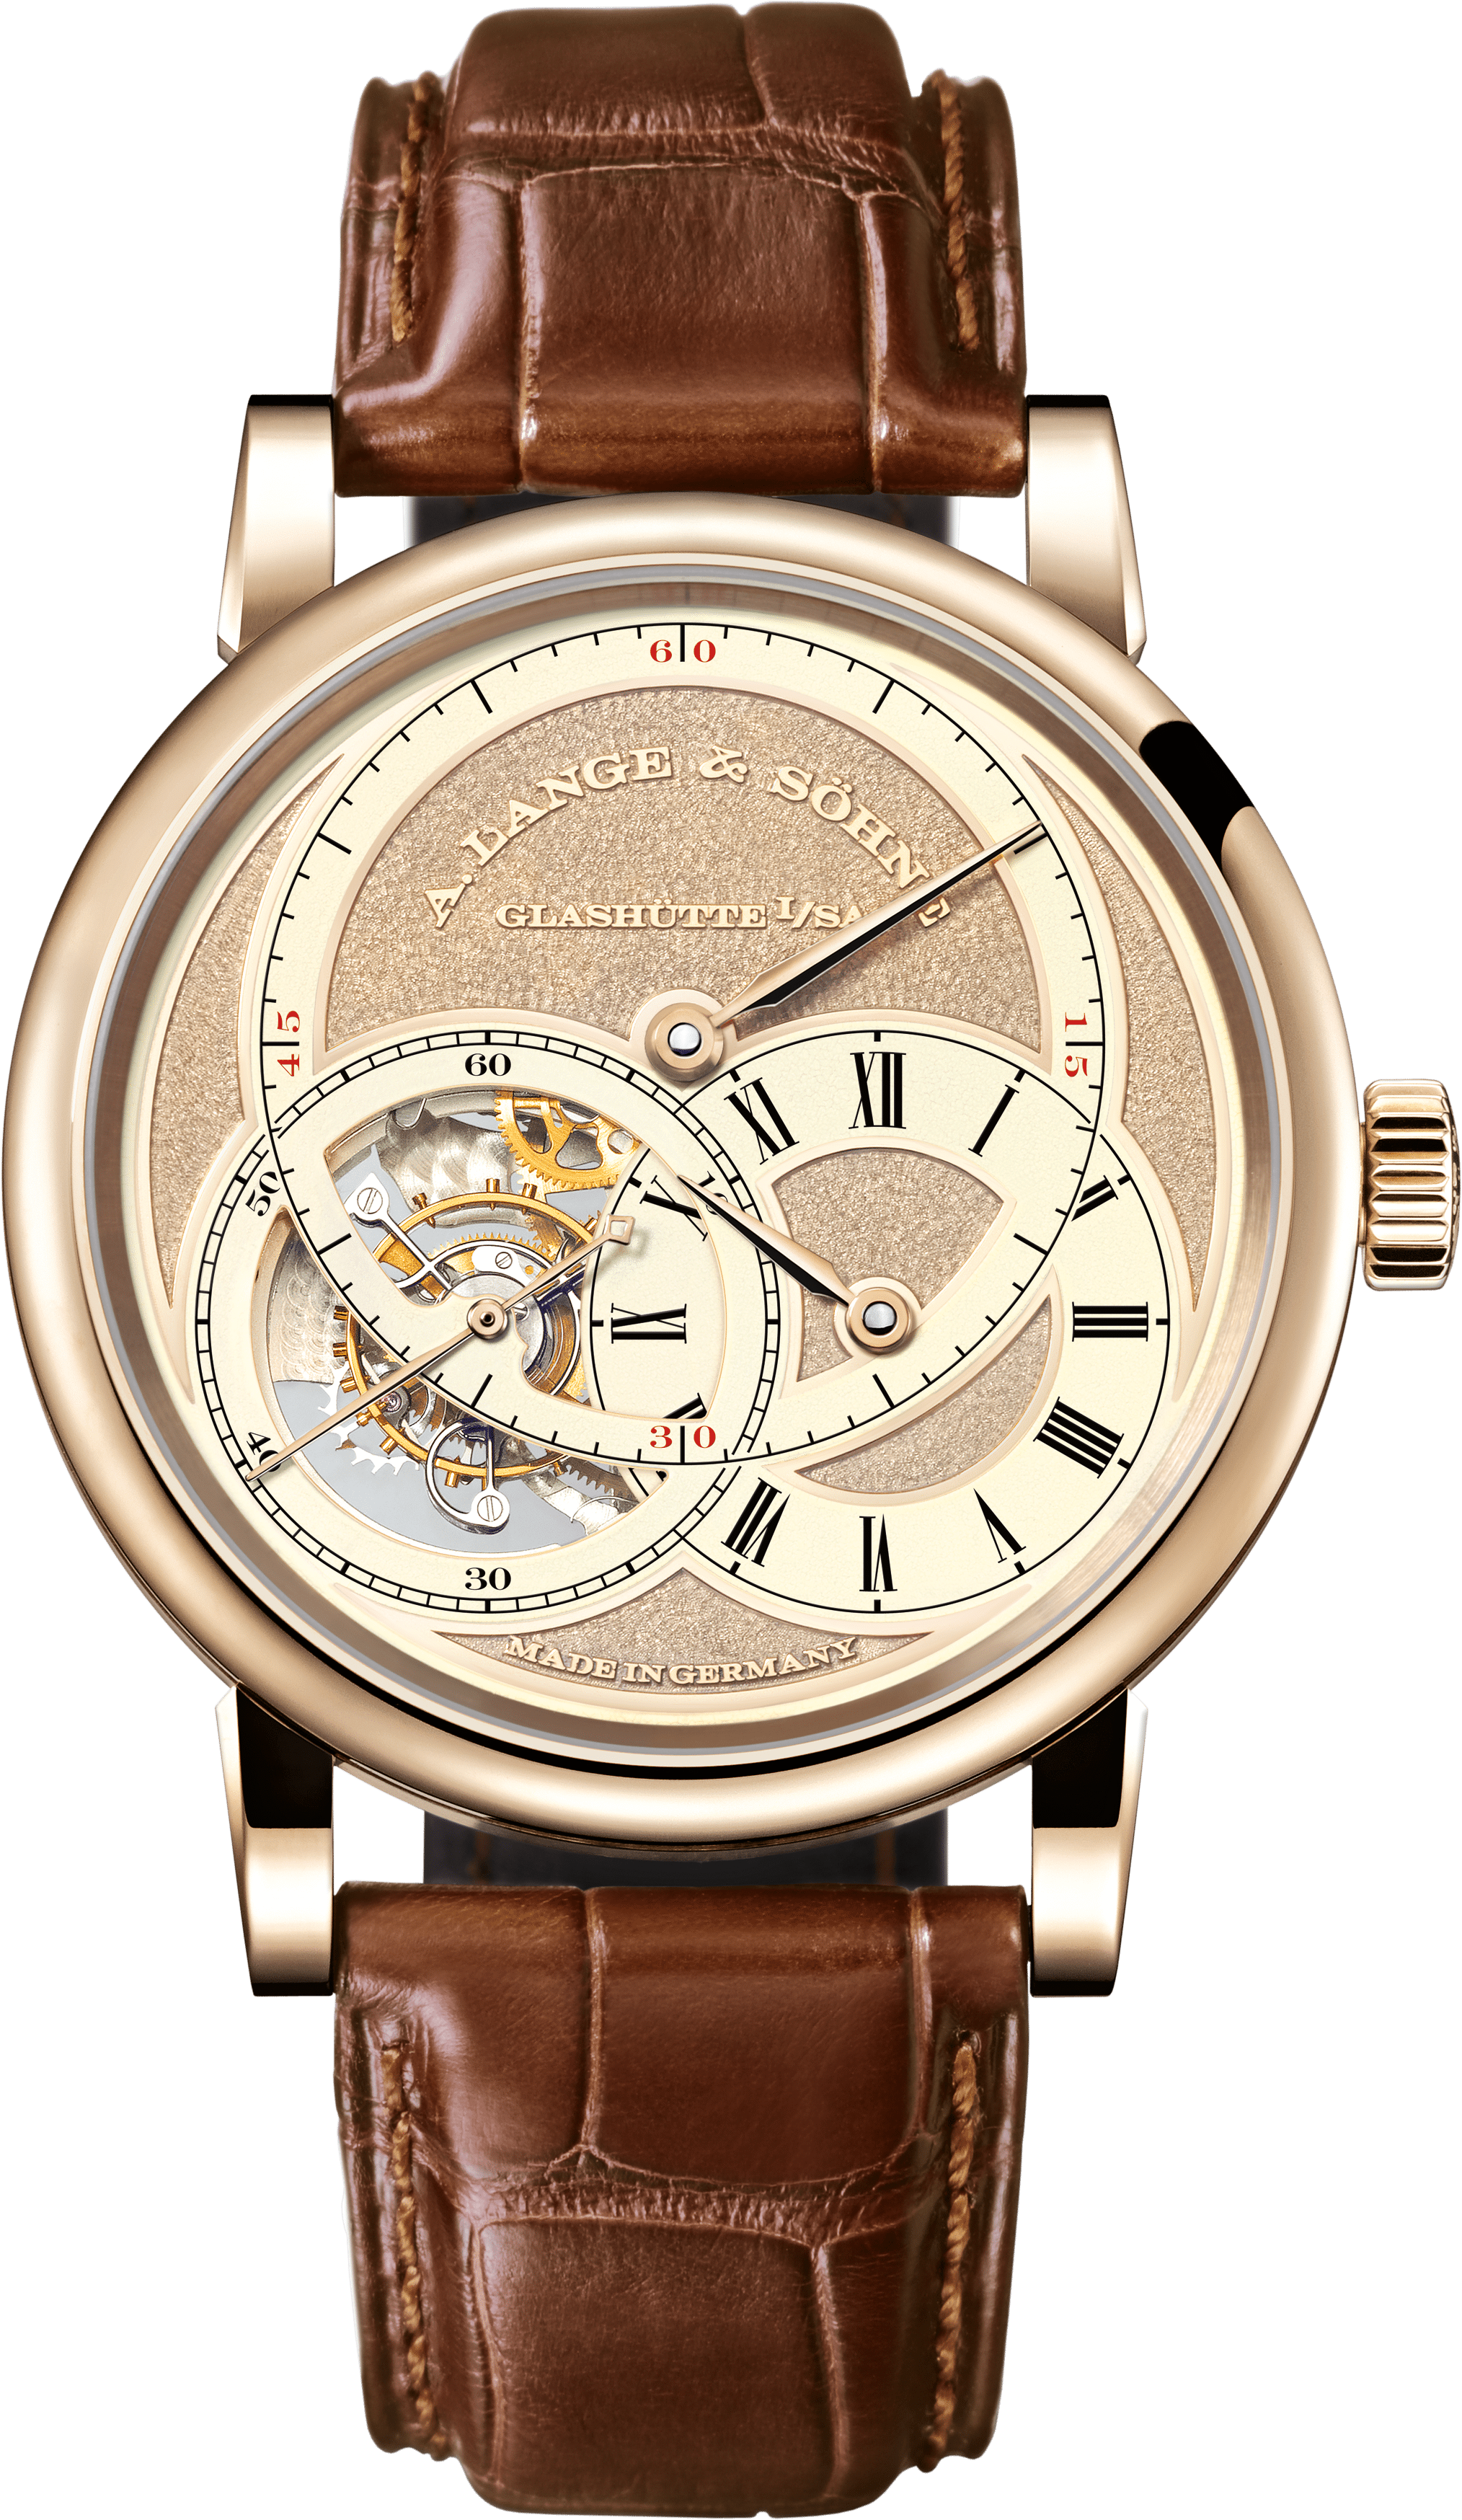 Dhgate Rolex Fake Watches